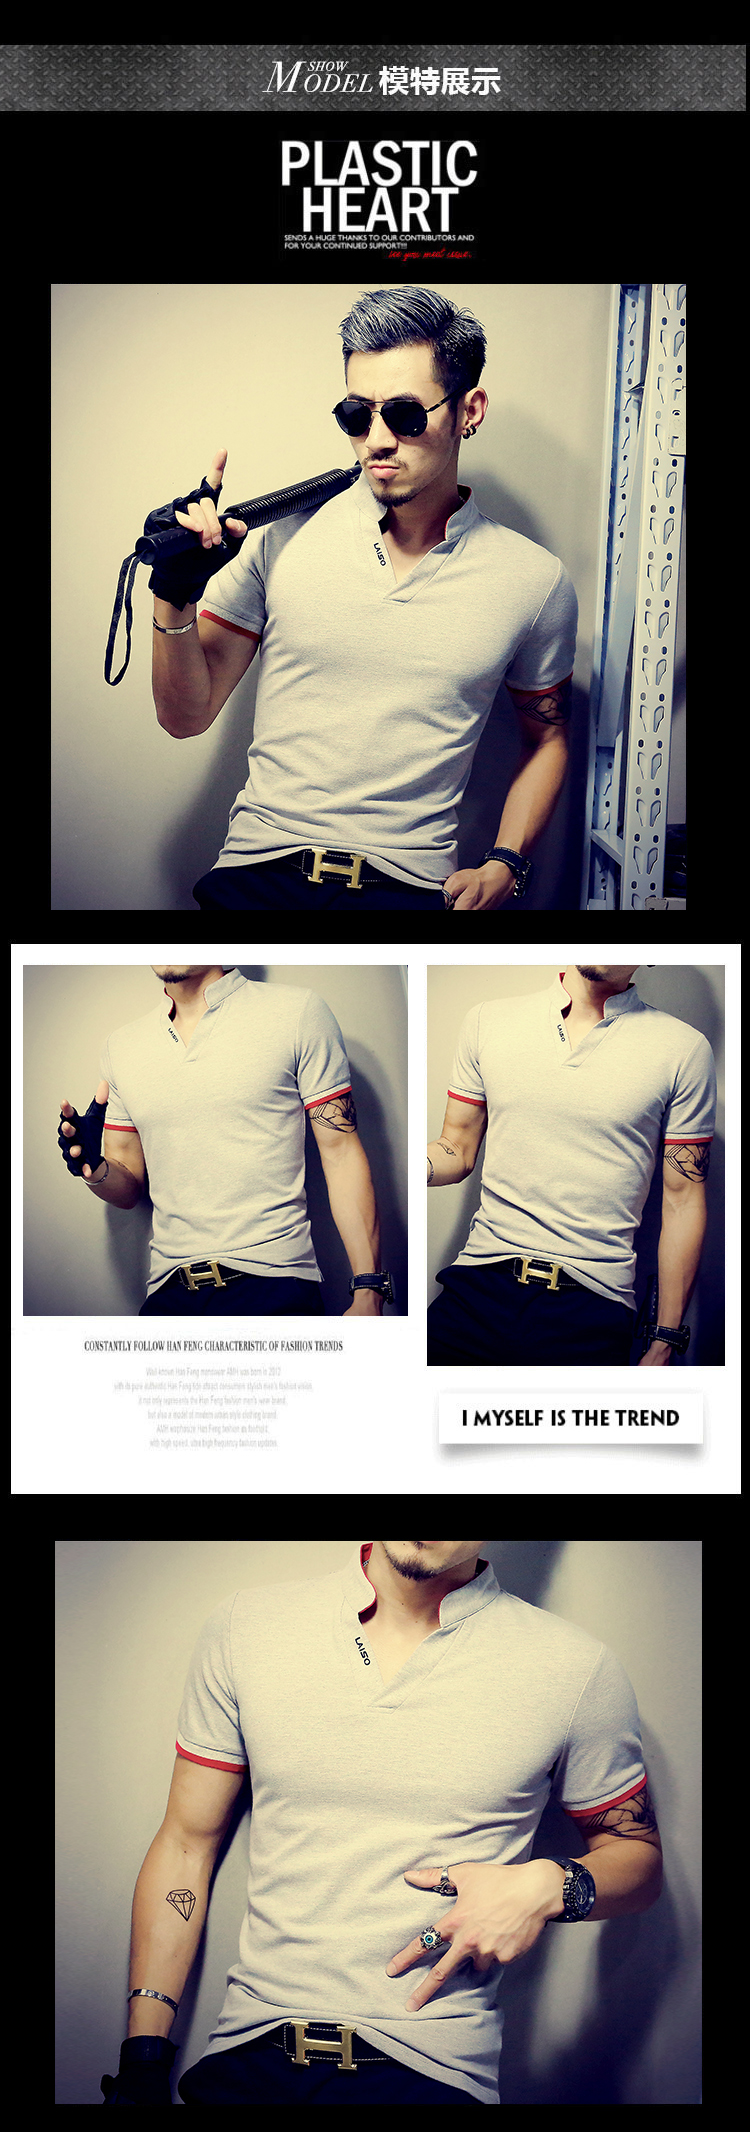 Hot-Sale-New-Fashion-Brand-Men-Polo-shirt-Solid-Color-Short-Sleeve-Slim-Fit-Shirt-Men-Cotton-polo-Sh-32788980061